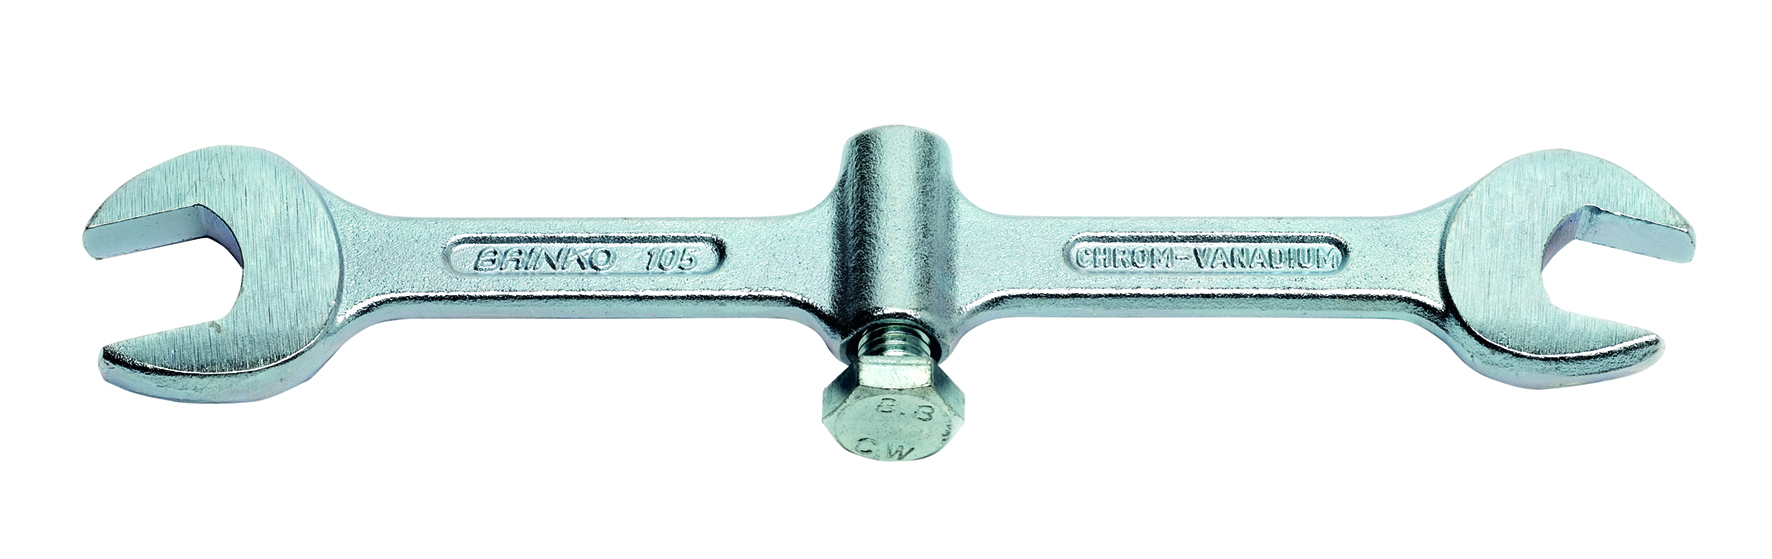 BGS 8448 Sanitär Kreuzschlüssel Vierkant Schlüssel Klempner Werkzeug 